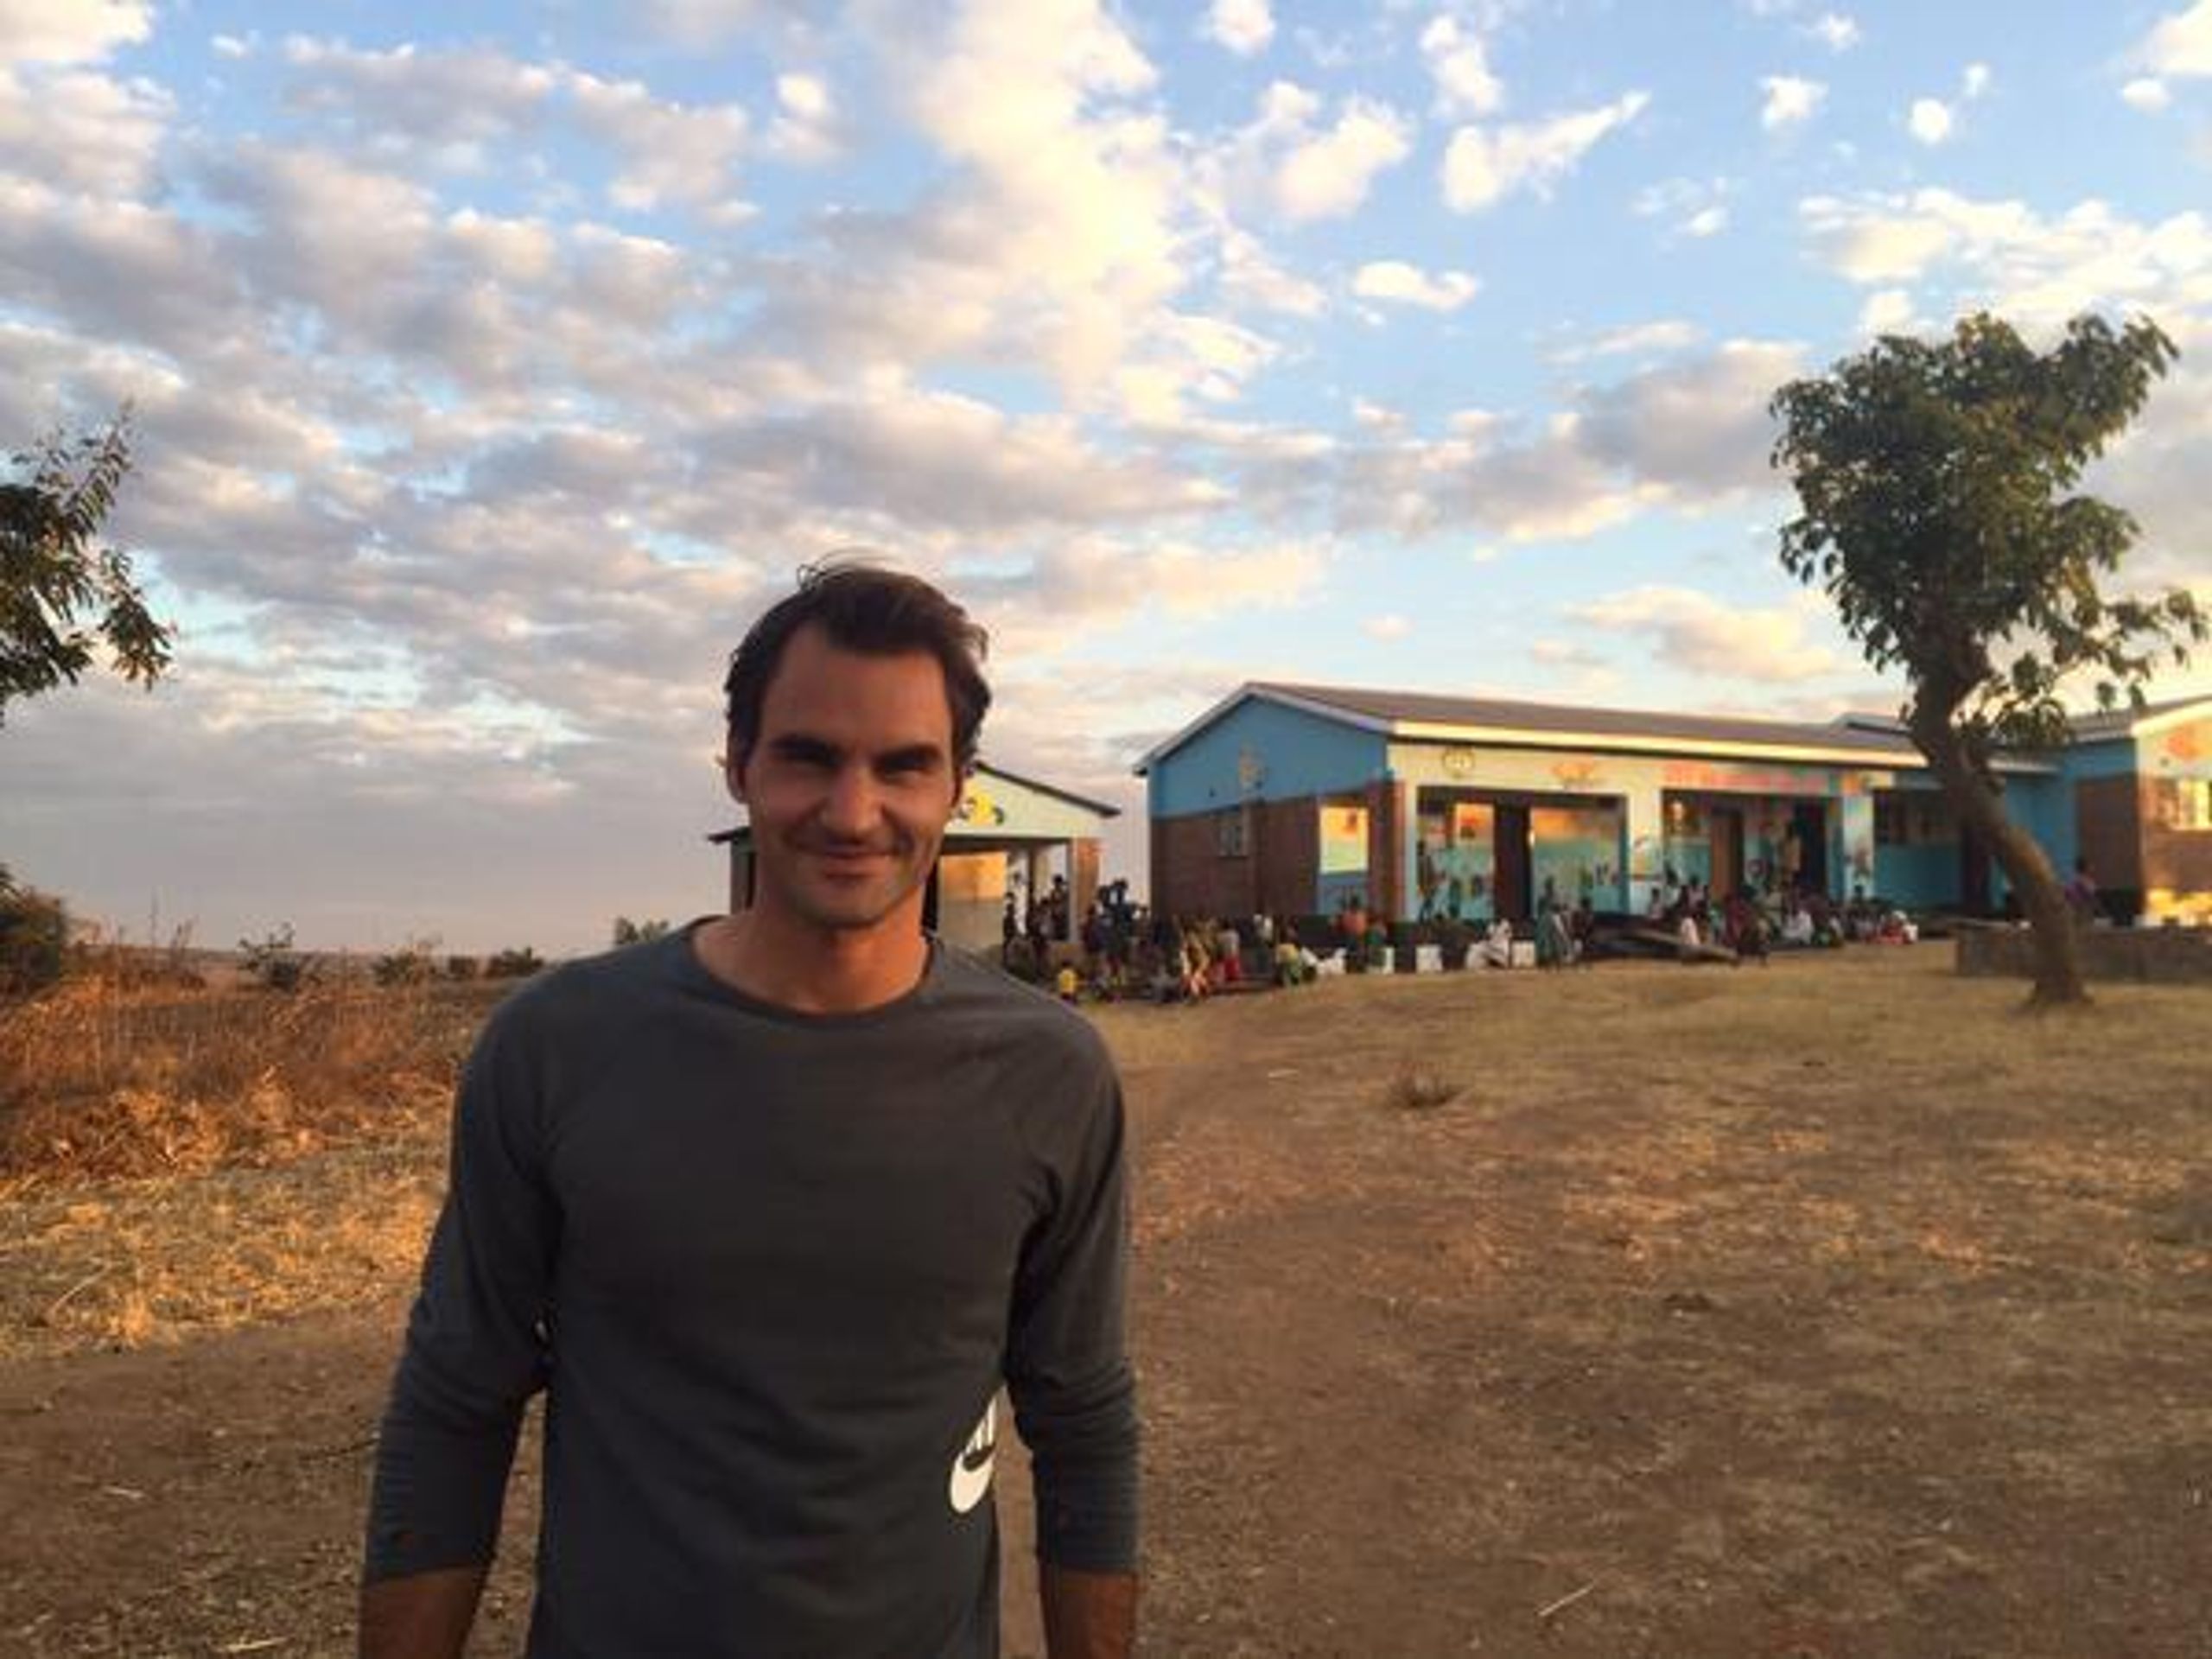 Roger Federer pomáhá dětem v Africe 4 - Galerie: Roger Federer pomáhá dětem v Africe (4/5)